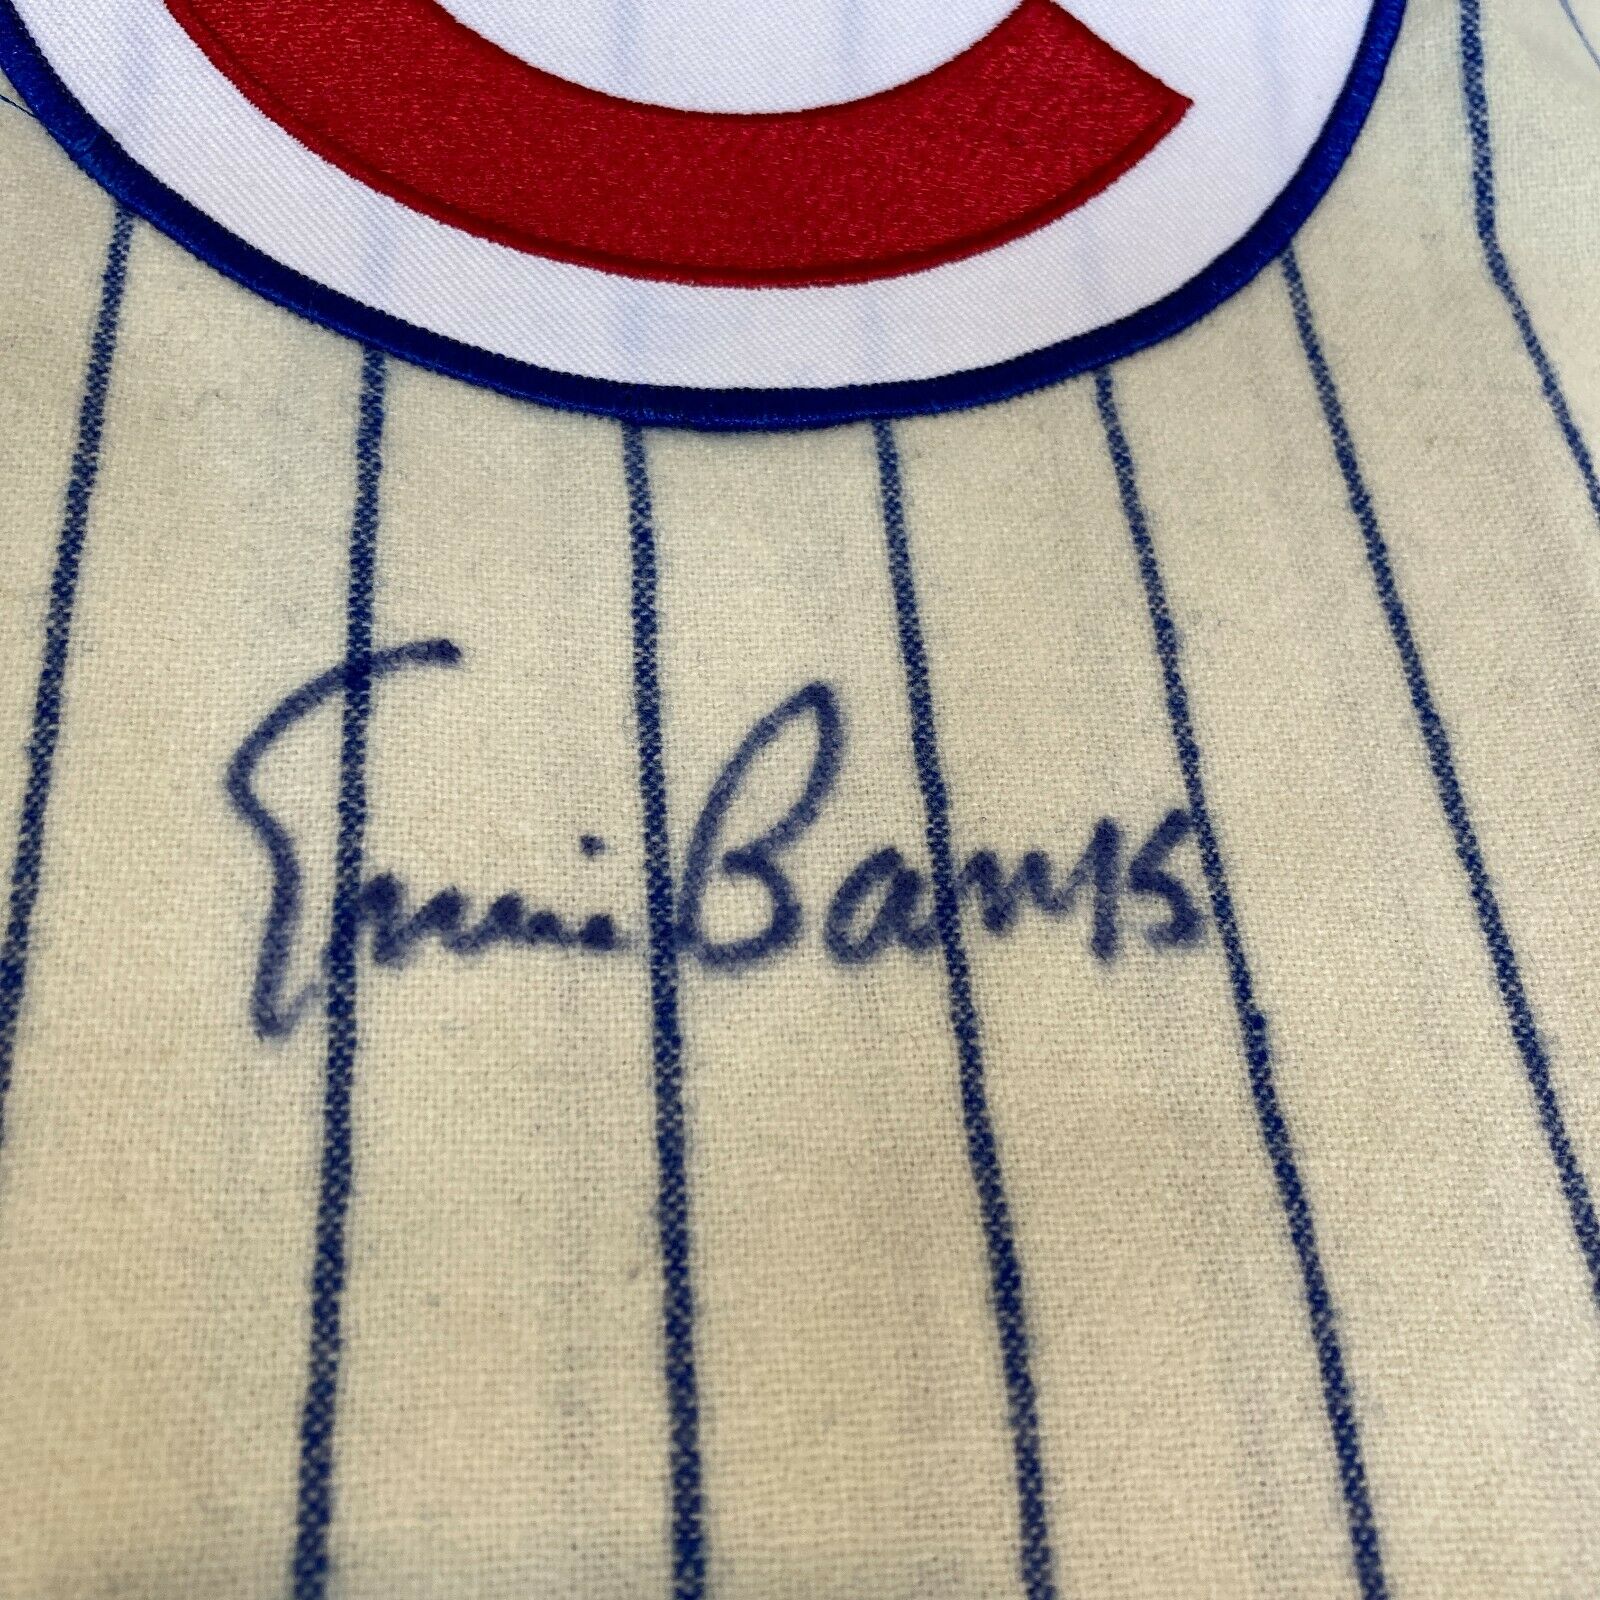 Ernie Banks jersey